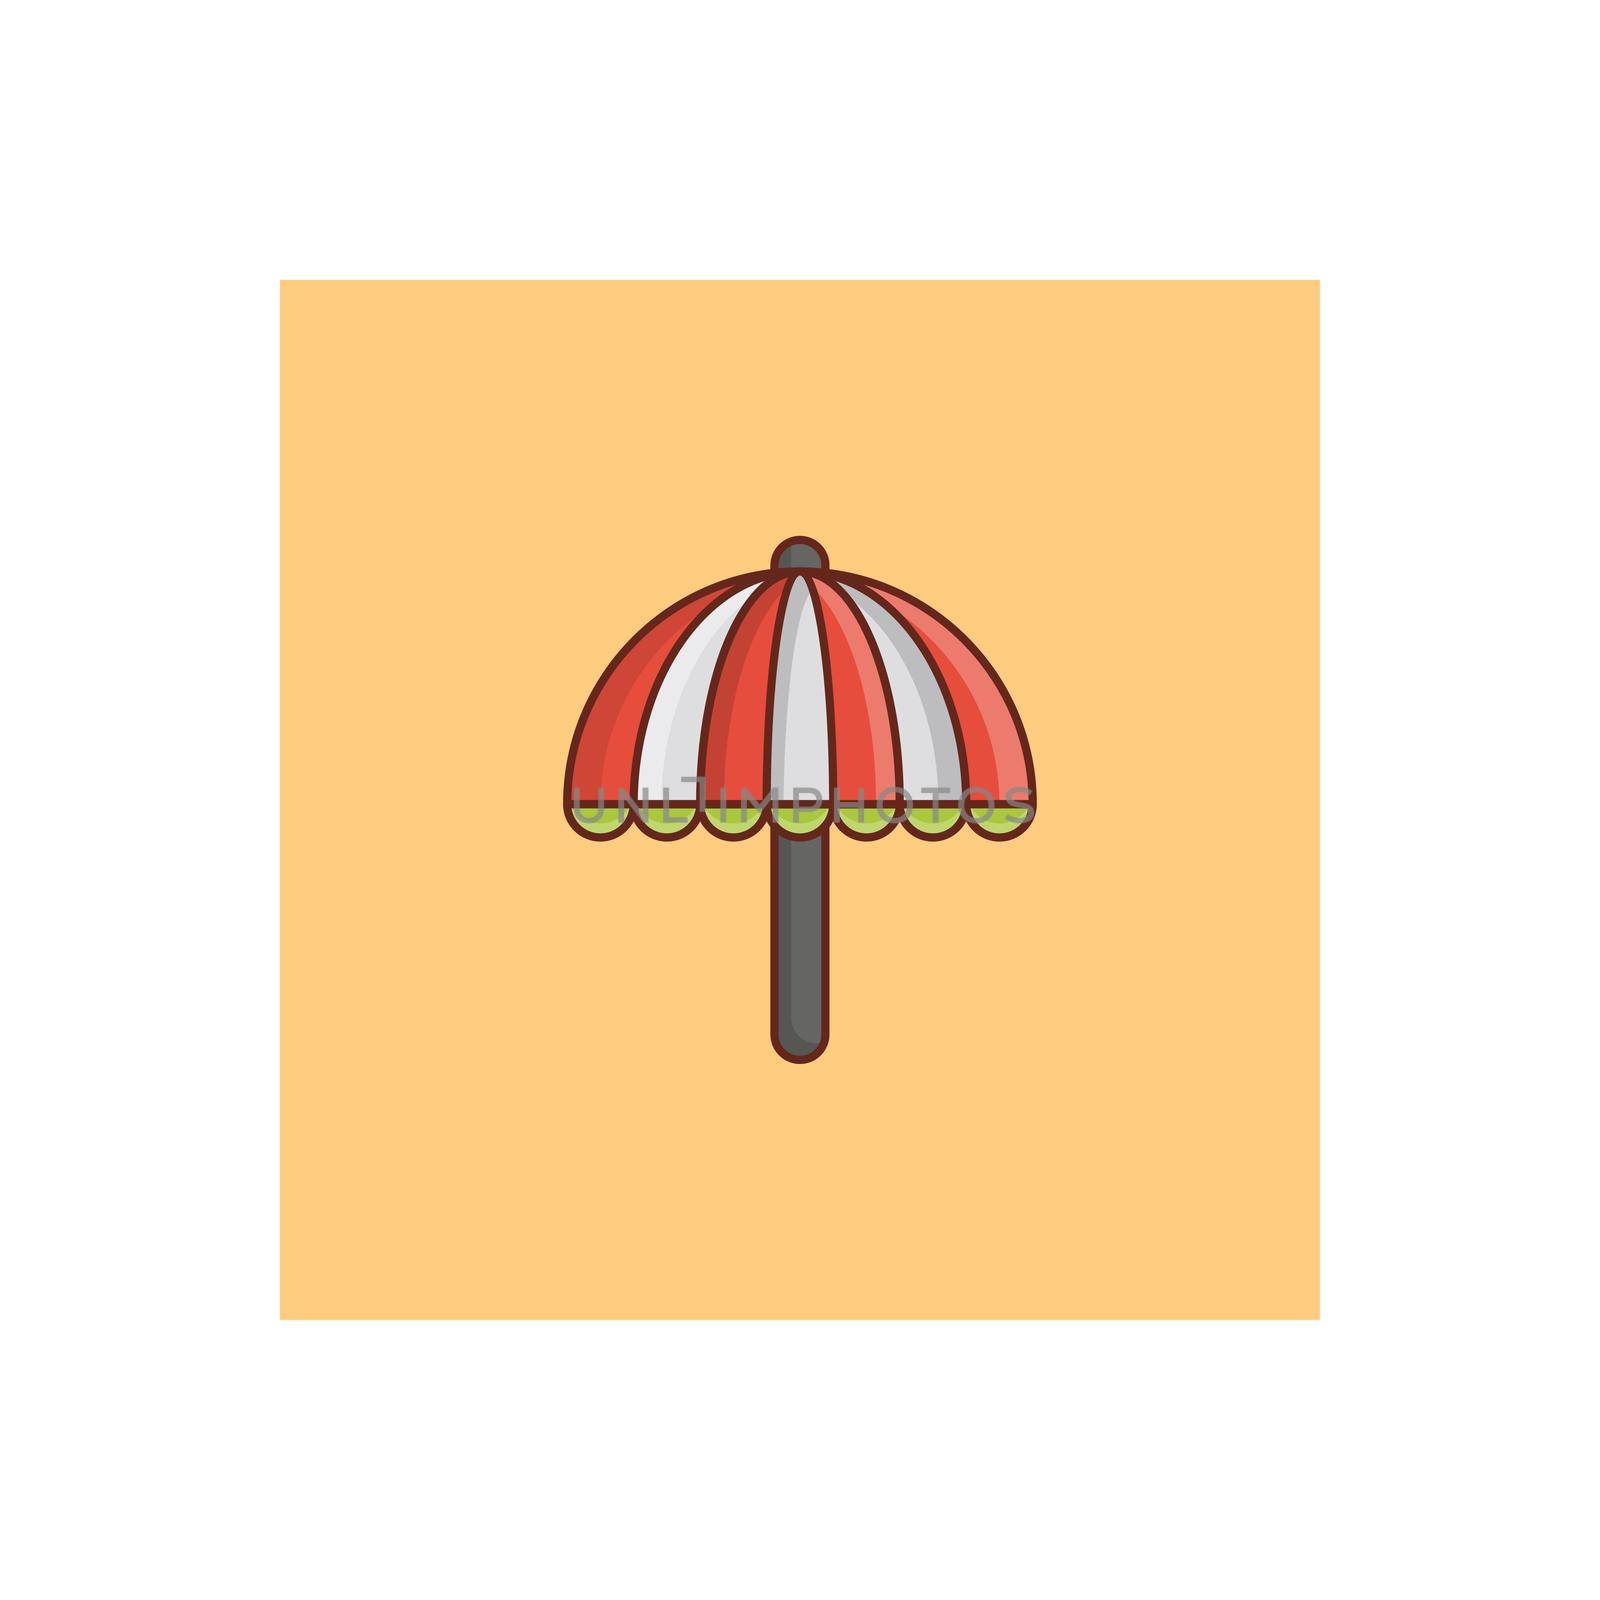 umbrella by FlaticonsDesign